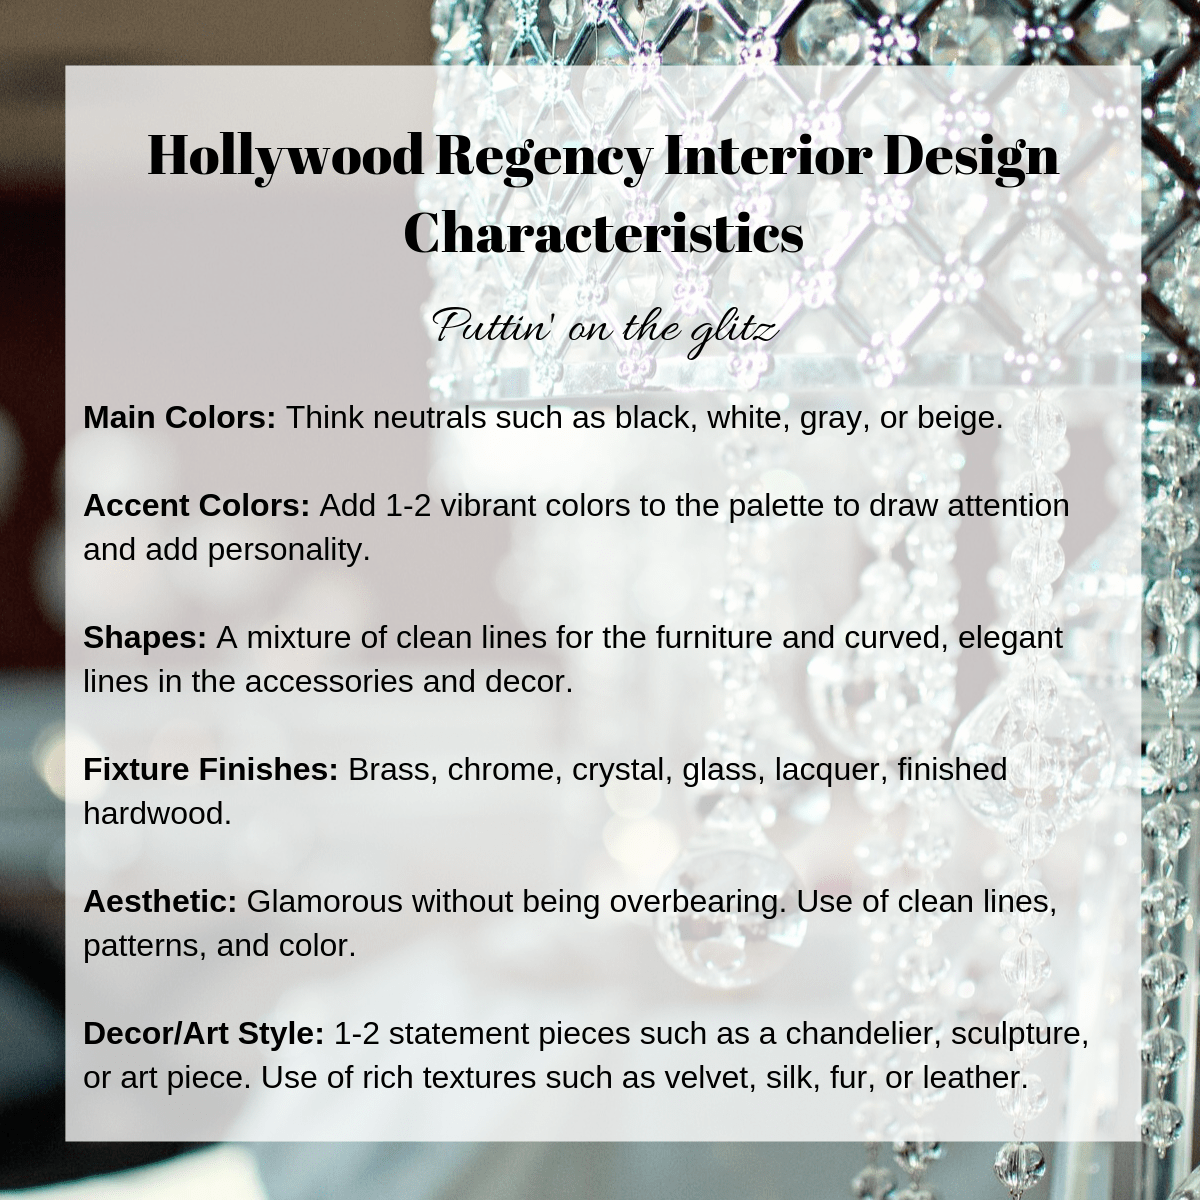 Hollywood Regency interior design characteristics